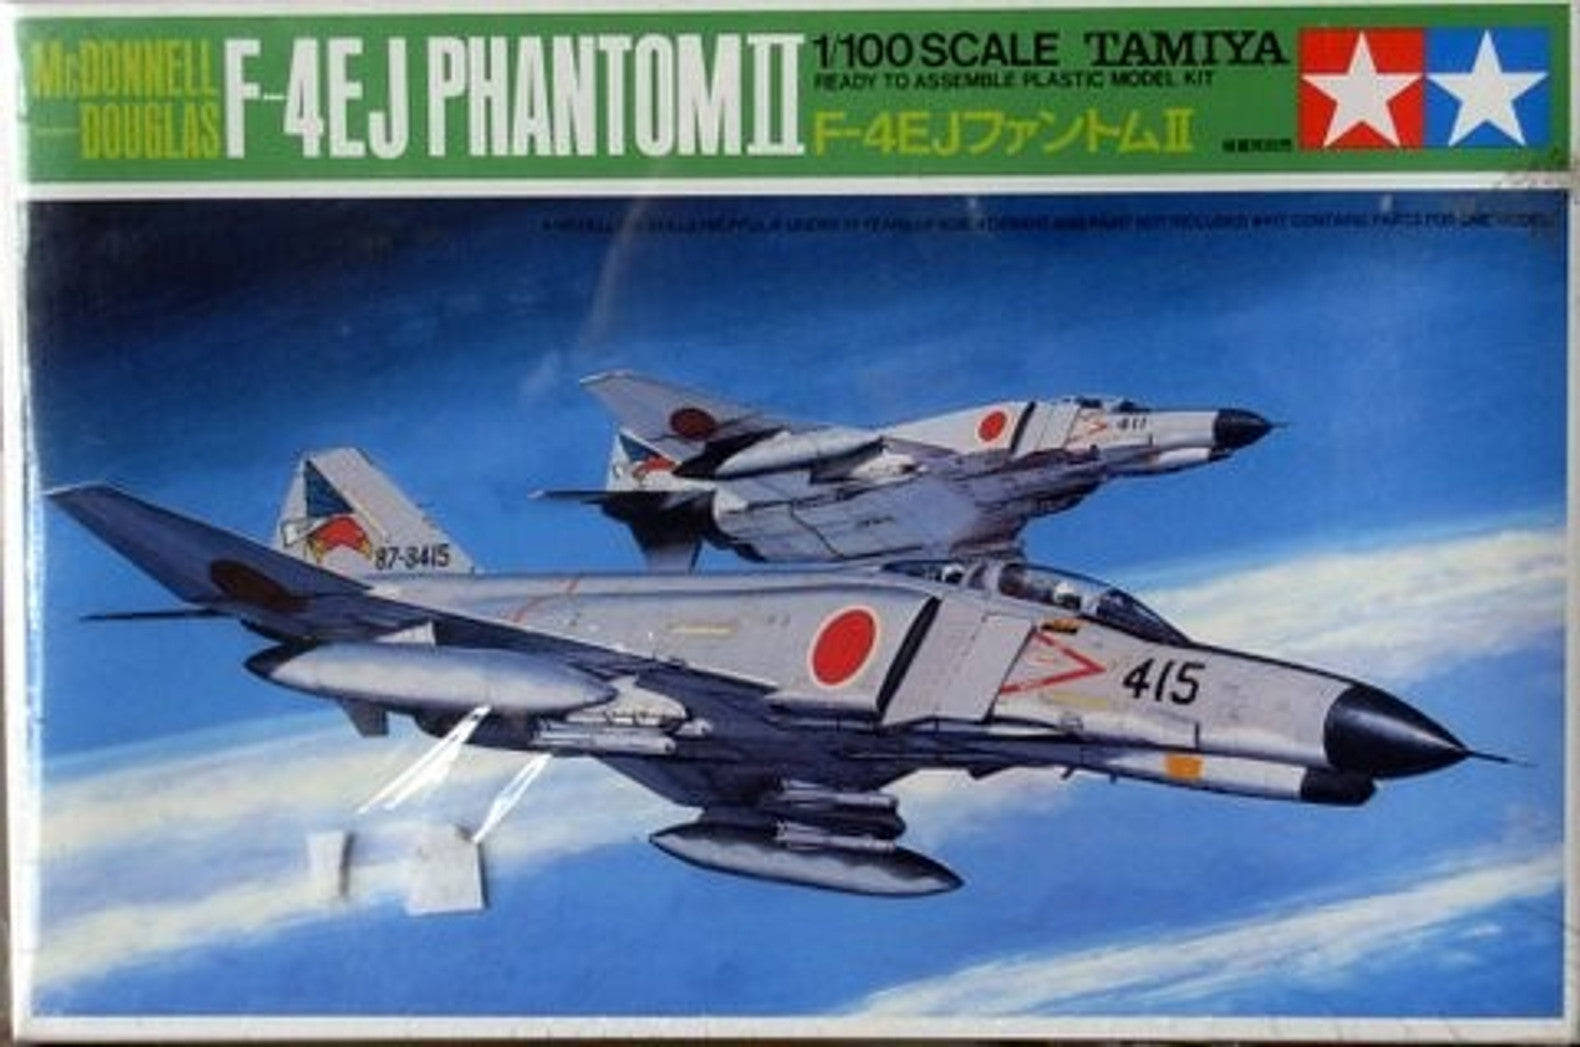 TAMIYA 60028 1/100 F-4EJ Phantom II